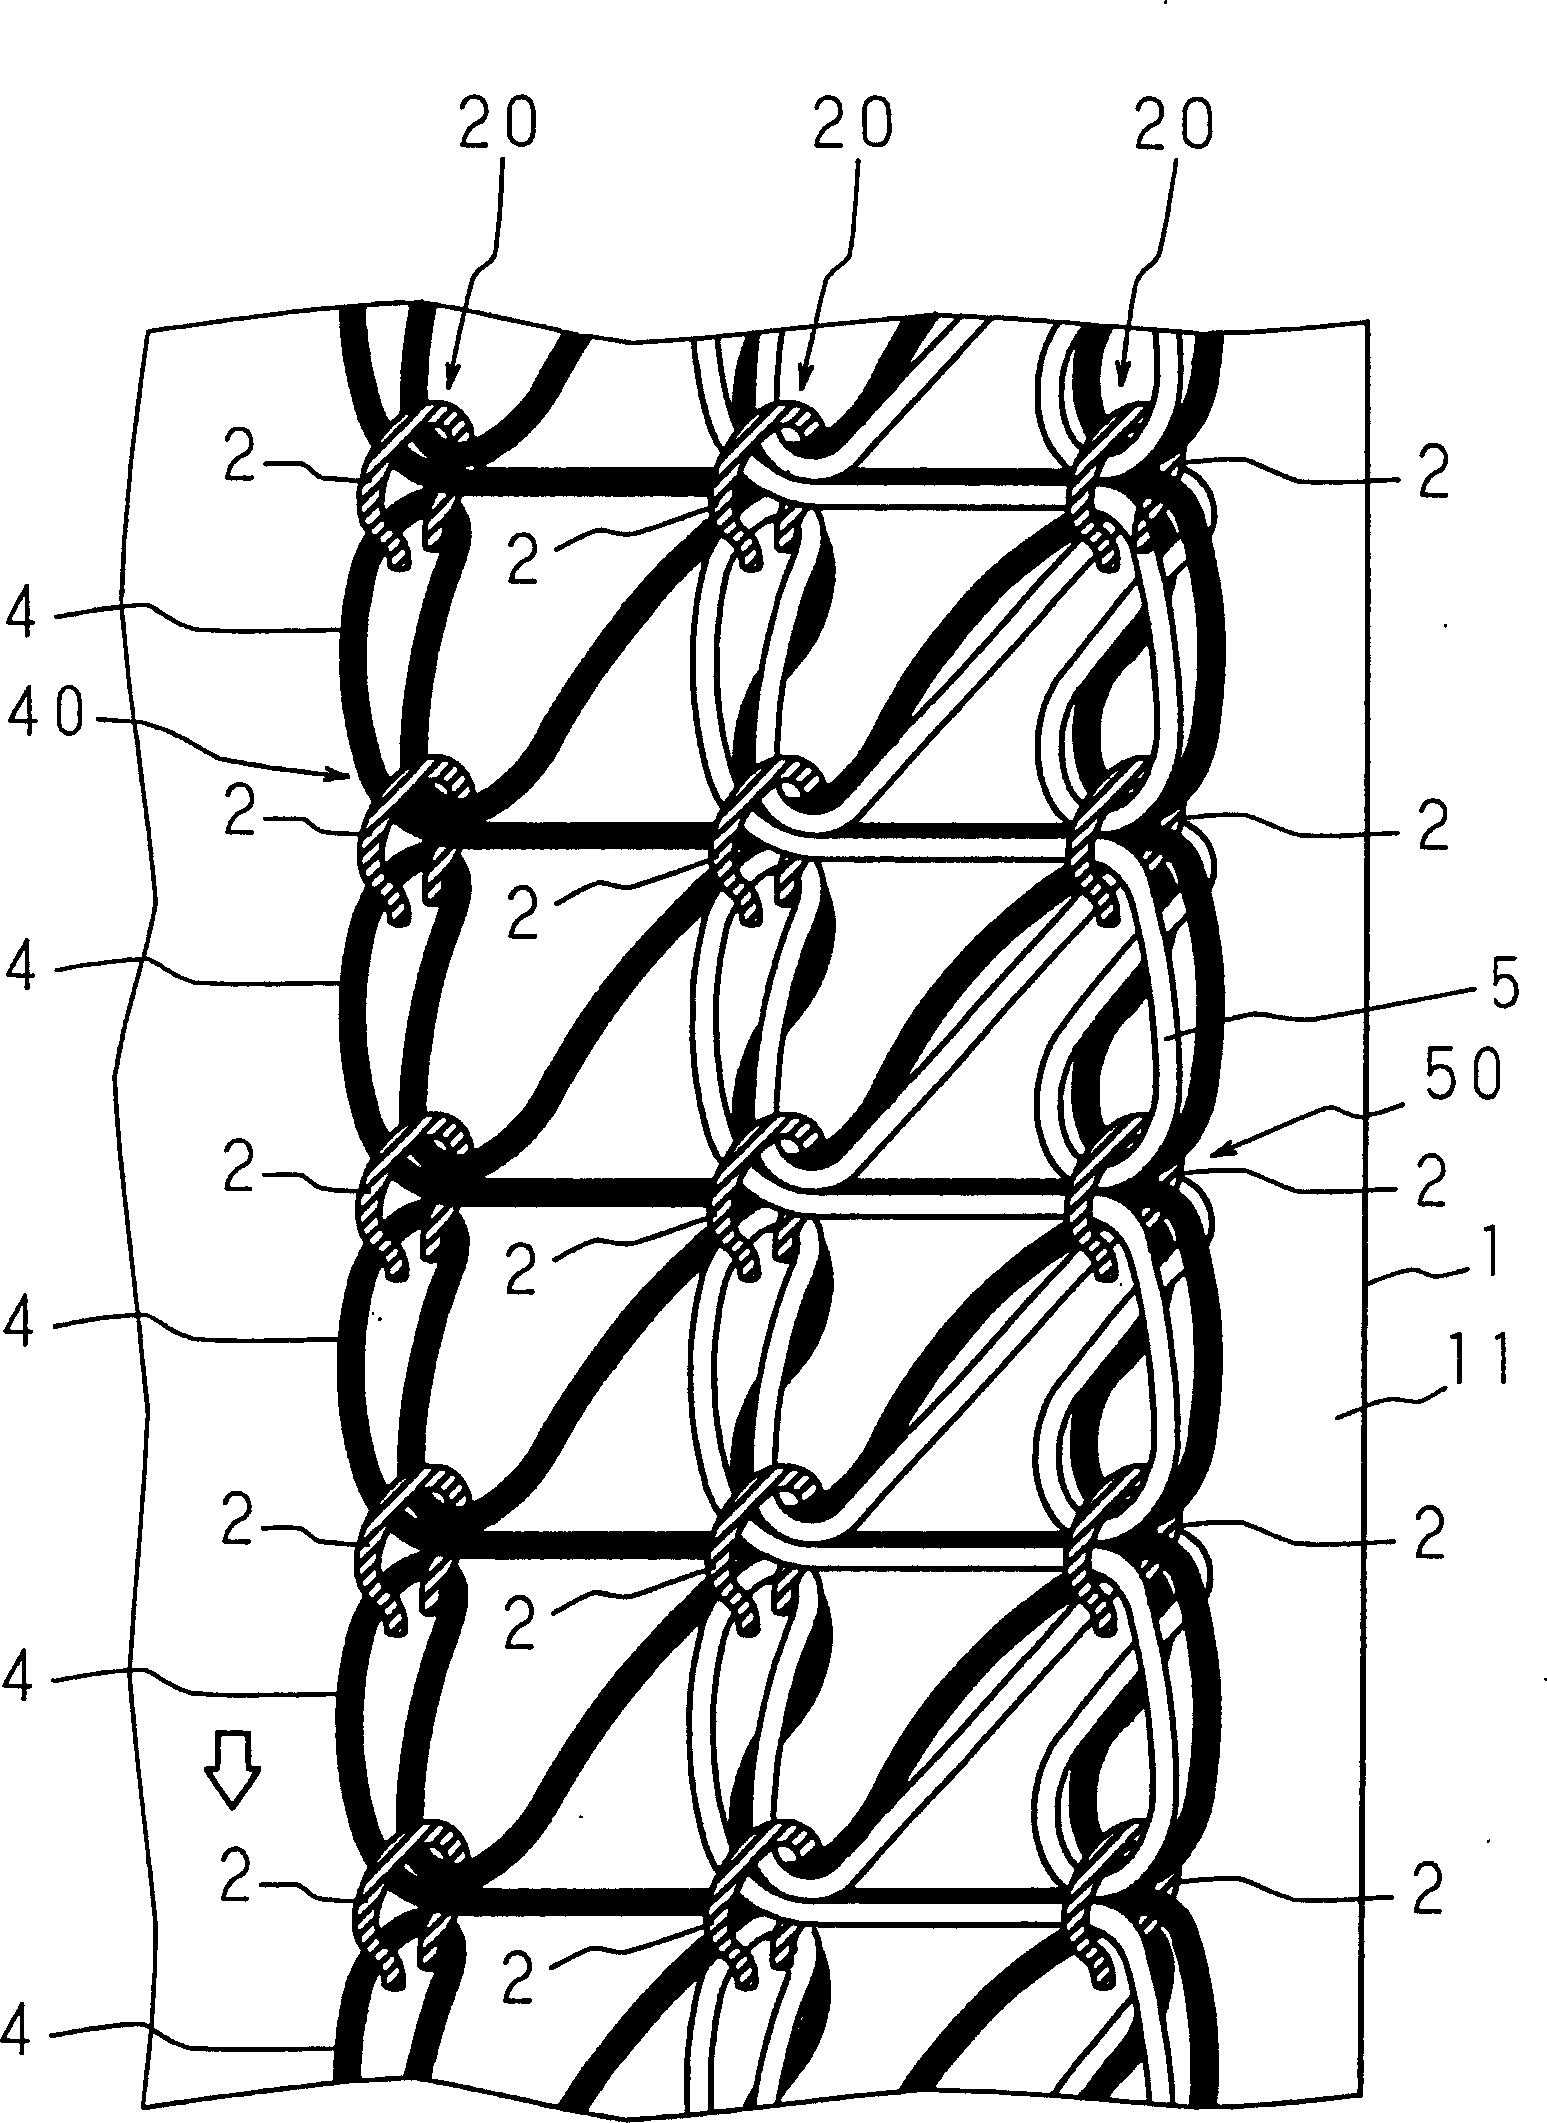 Stitching structure